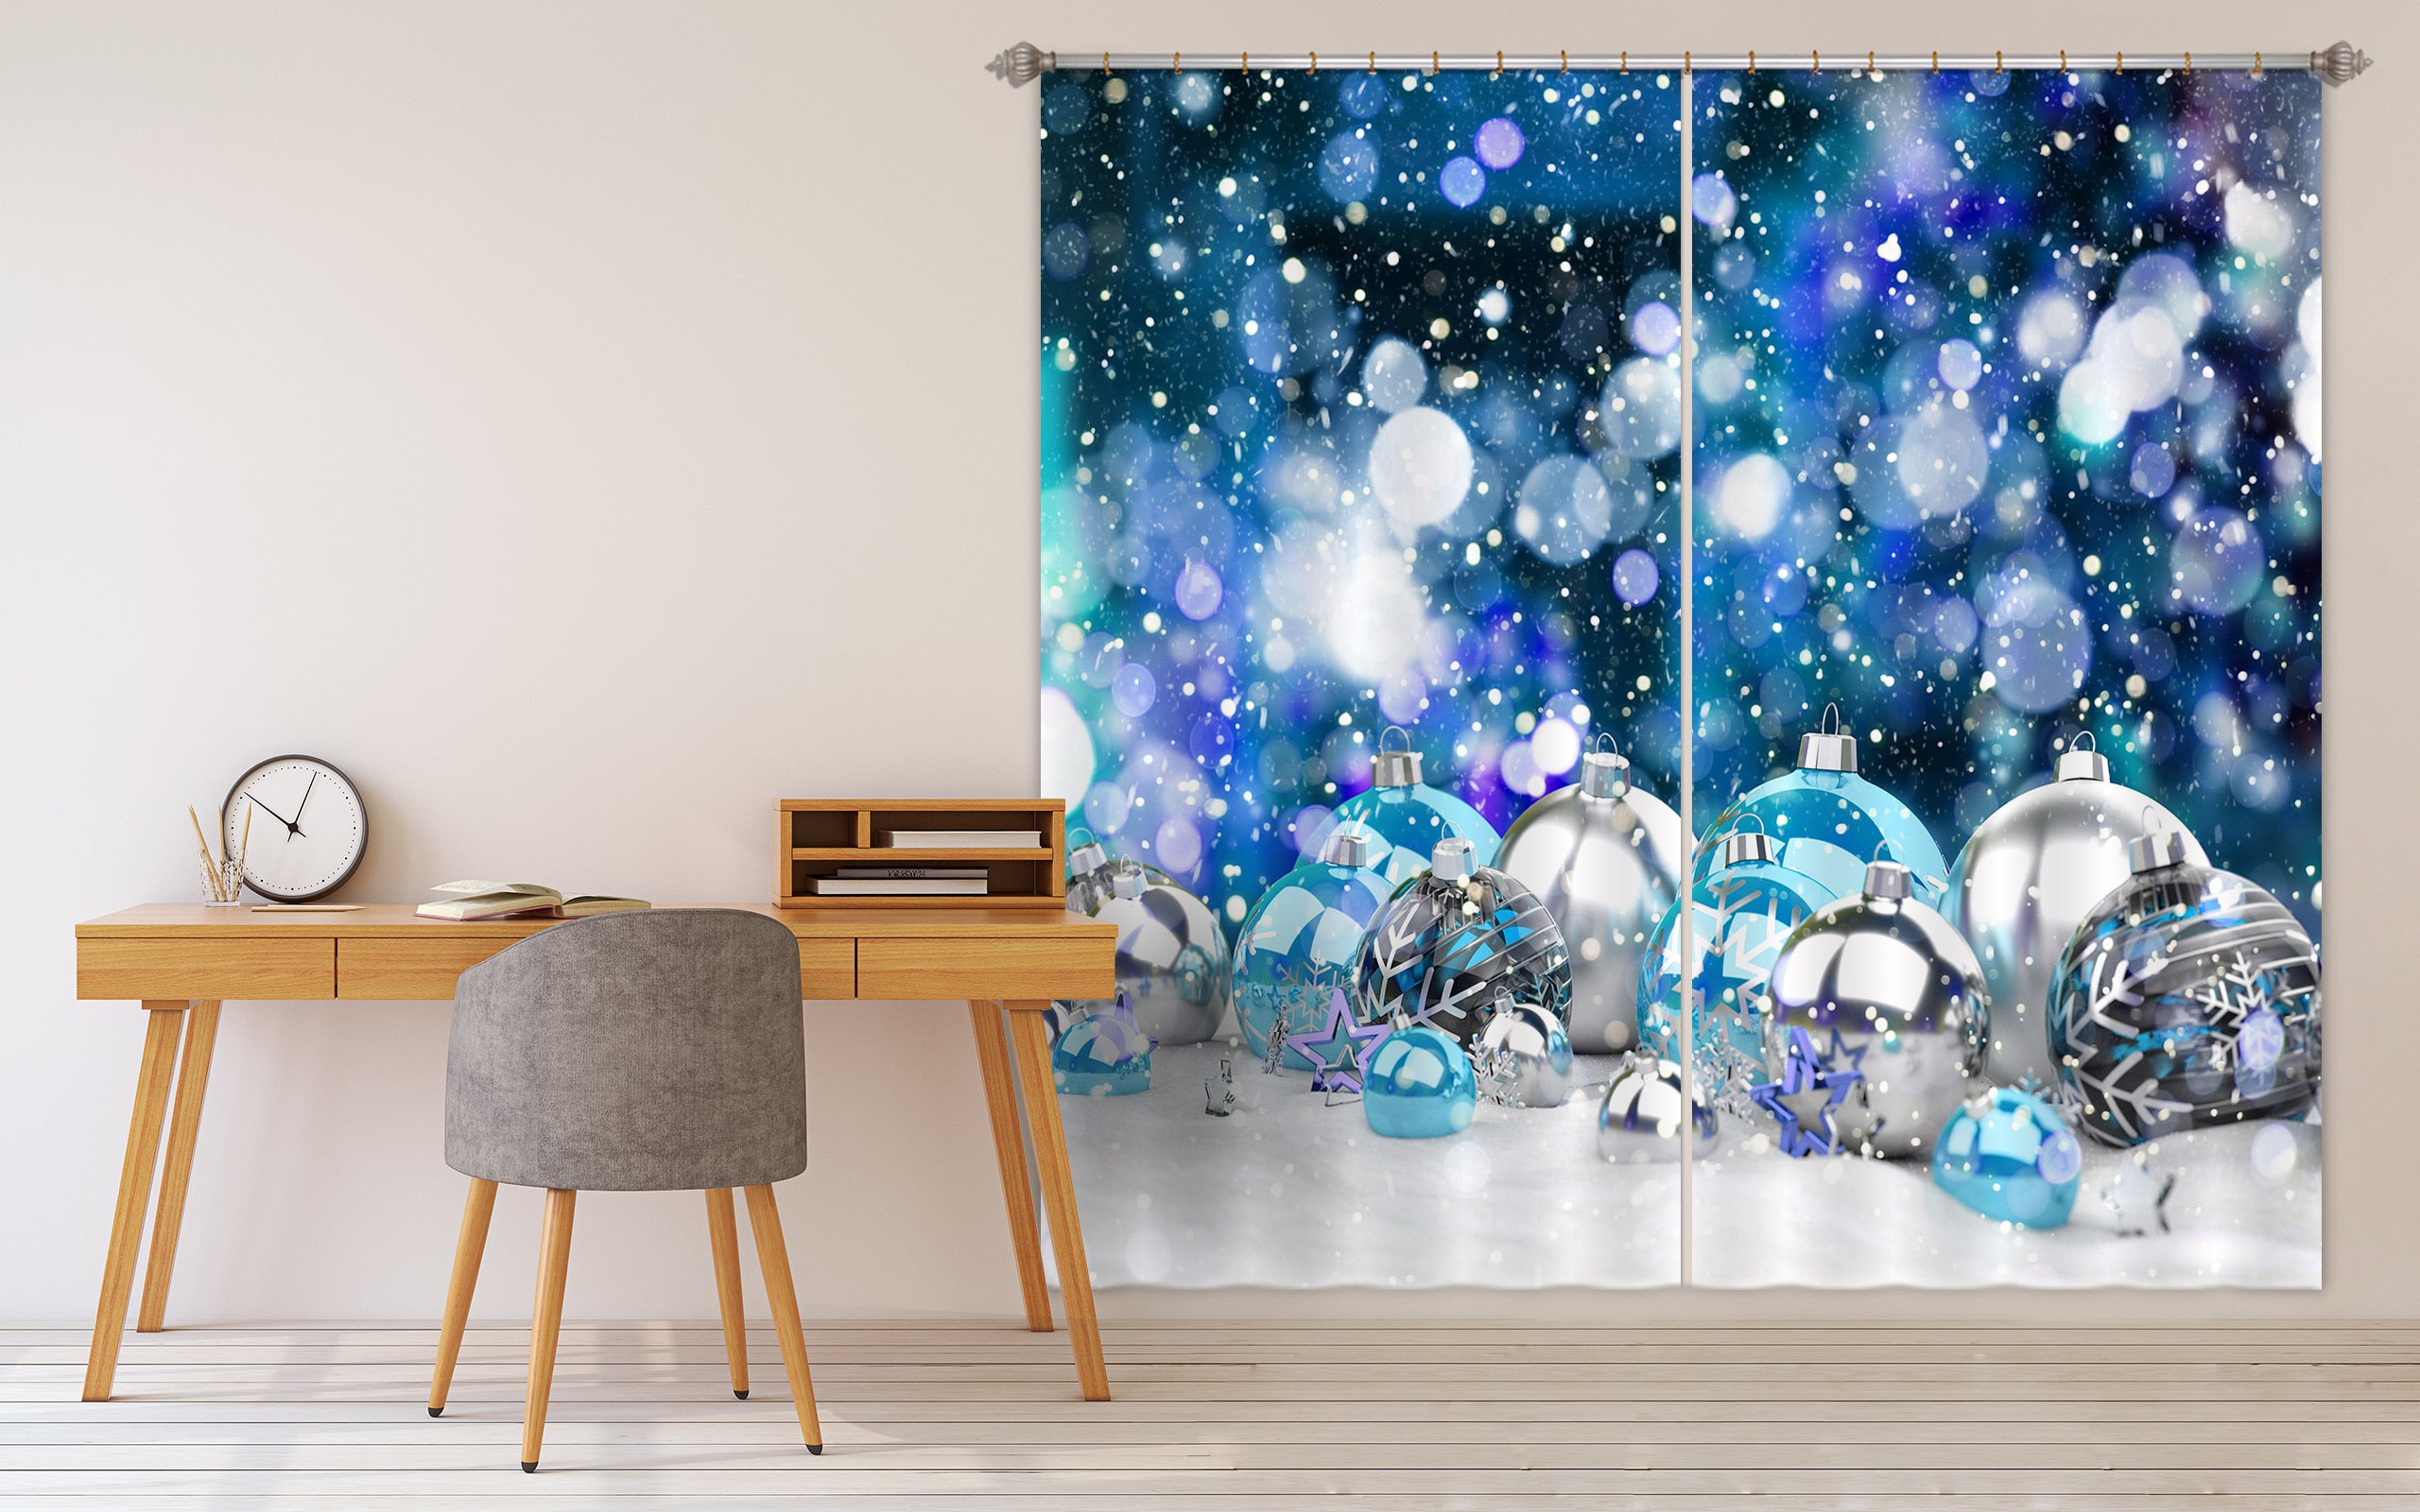 3D Silver Blue Ball 52046 Christmas Curtains Drapes Xmas